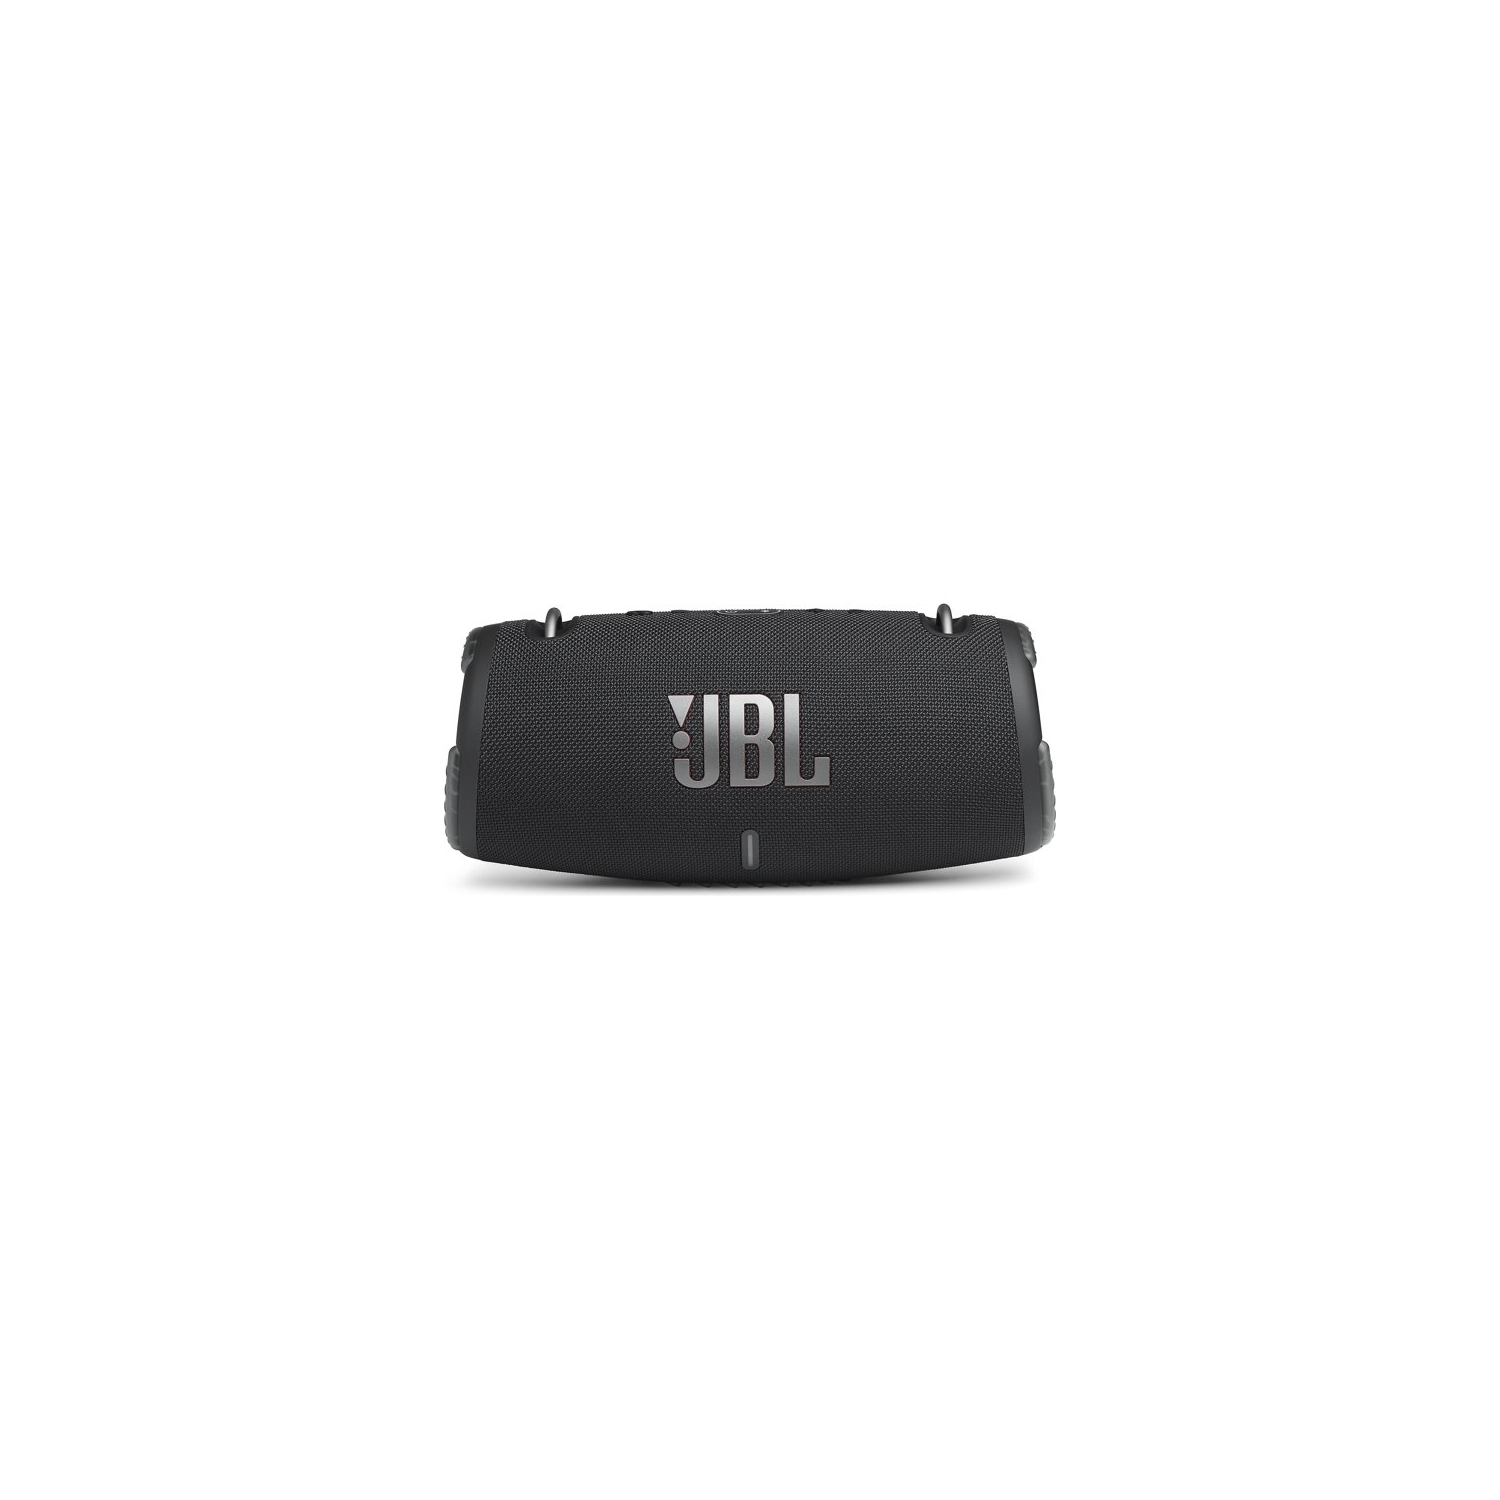 JBL Xtreme 3 Portable Wireless Bluetooth Speaker - Black - Open Box